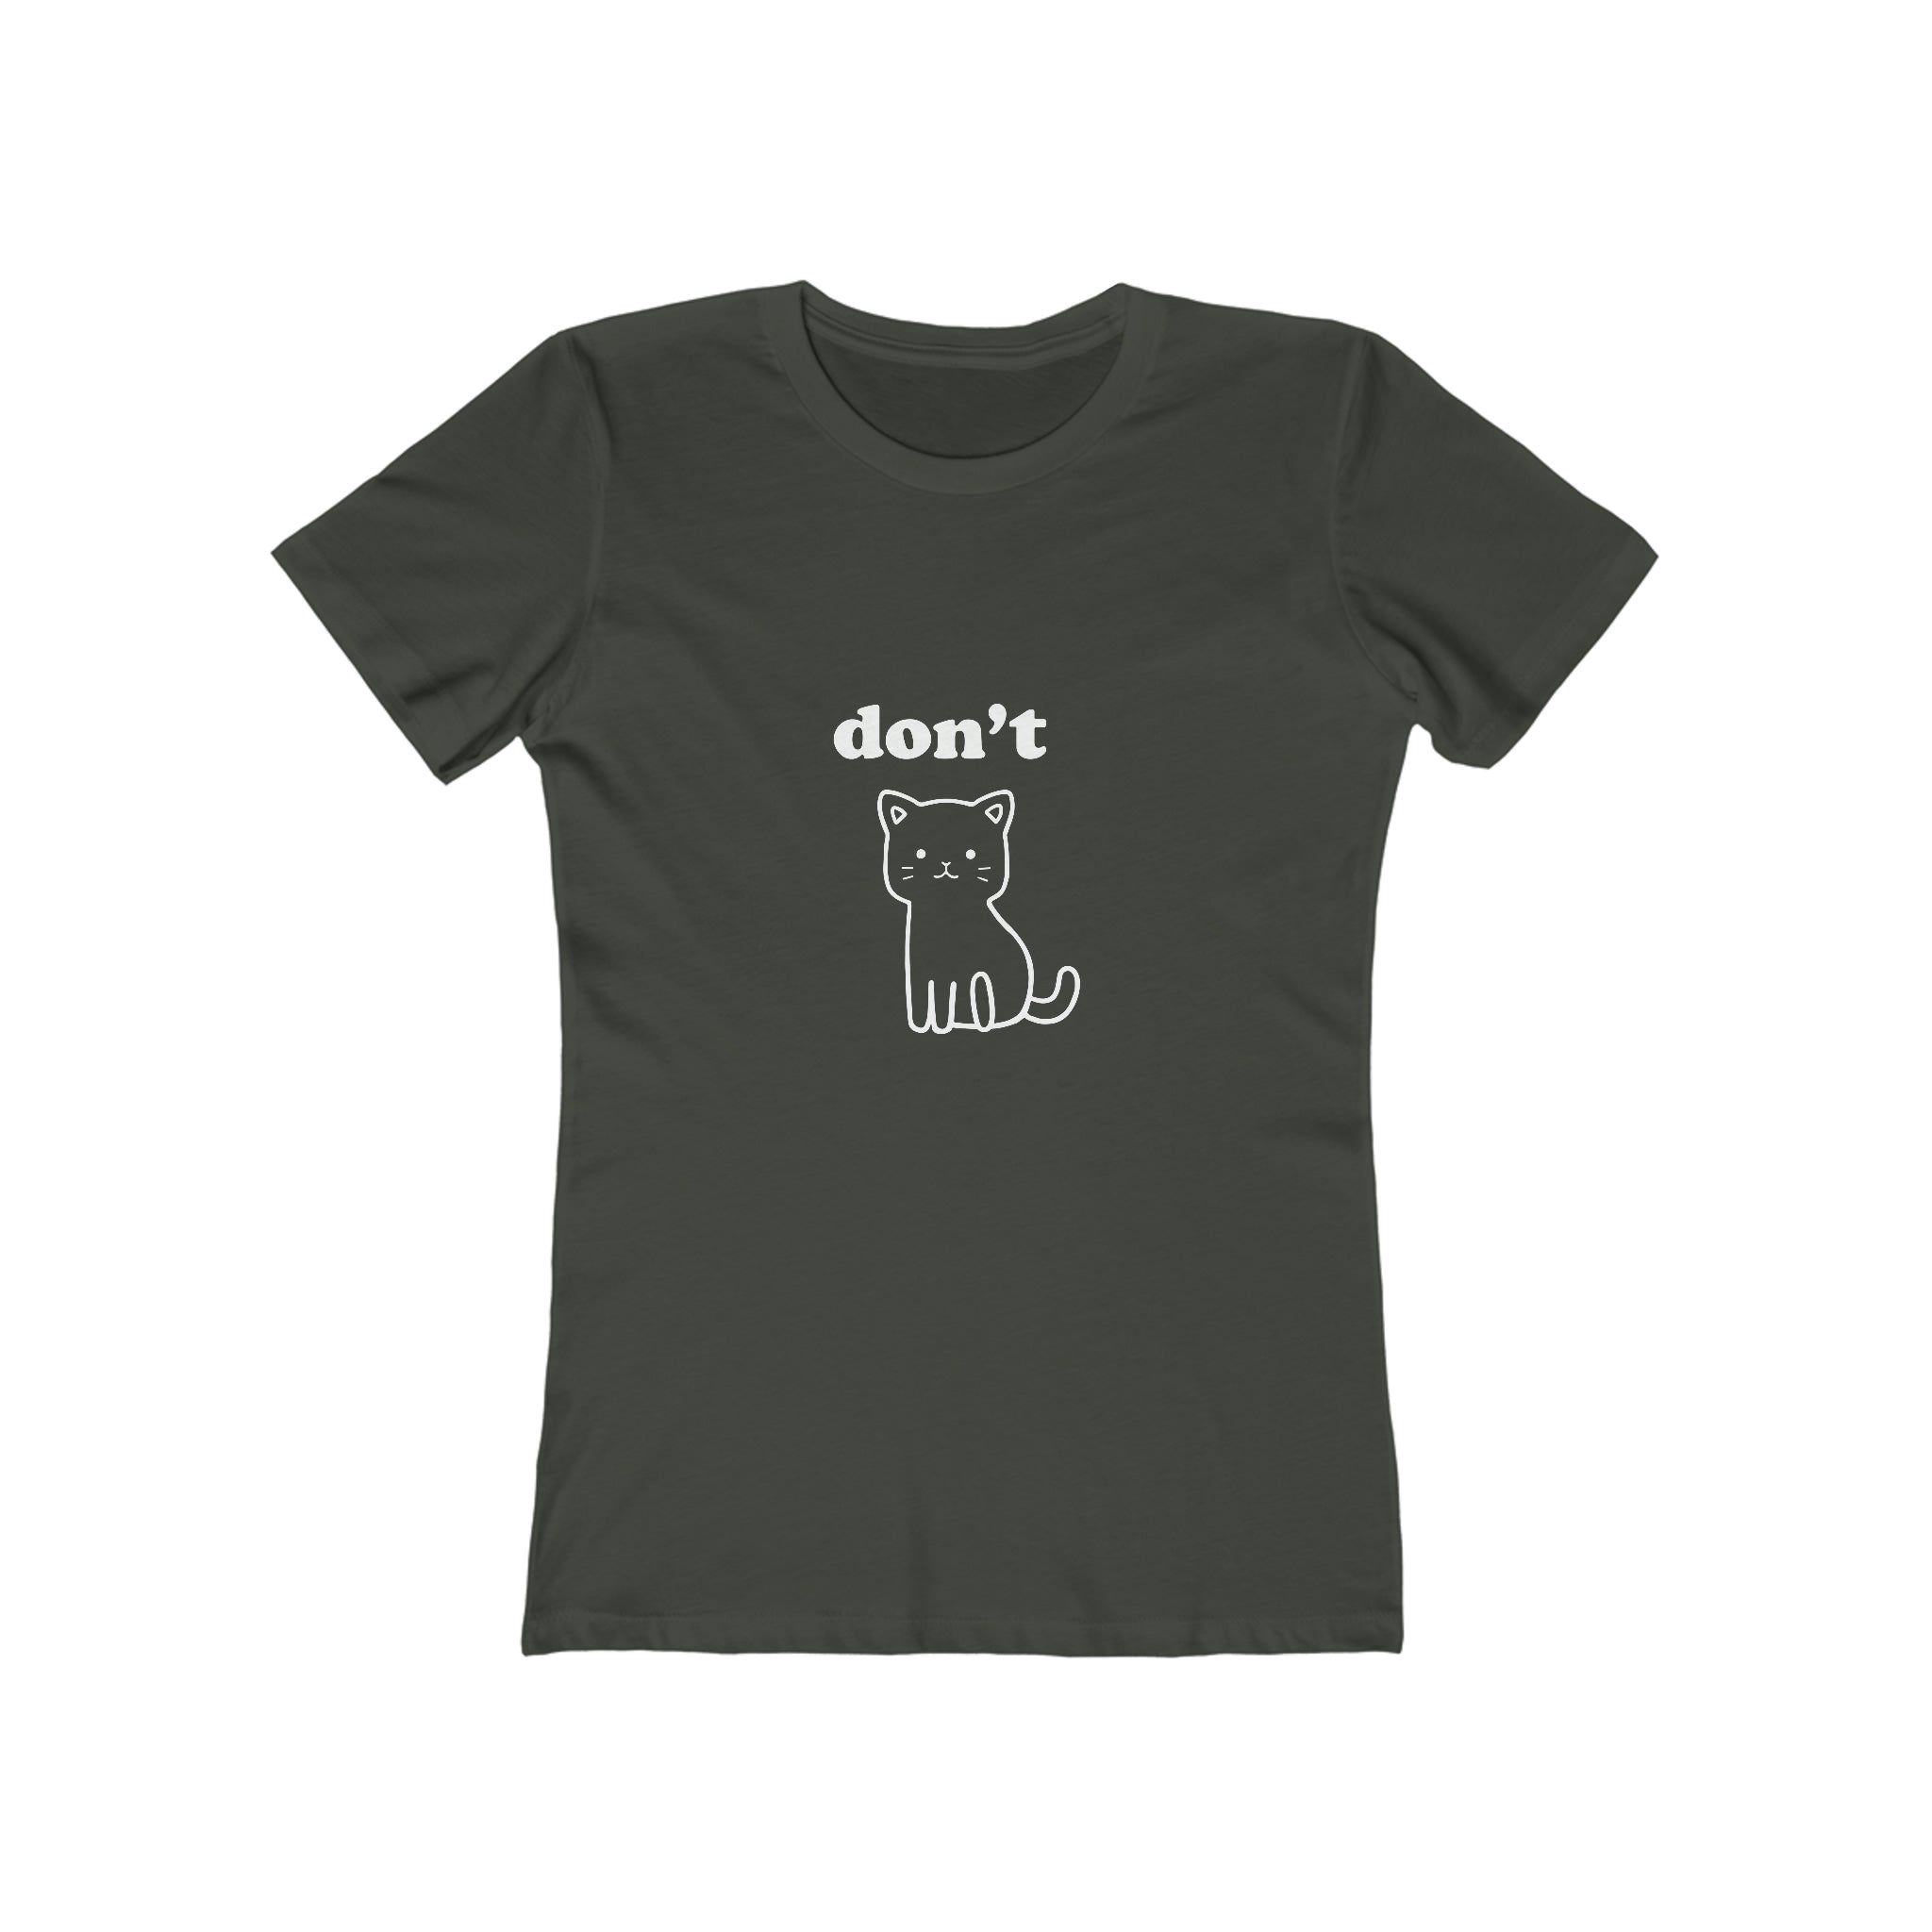 Don't Kitty : Women's 100% Cotton T-Shirt